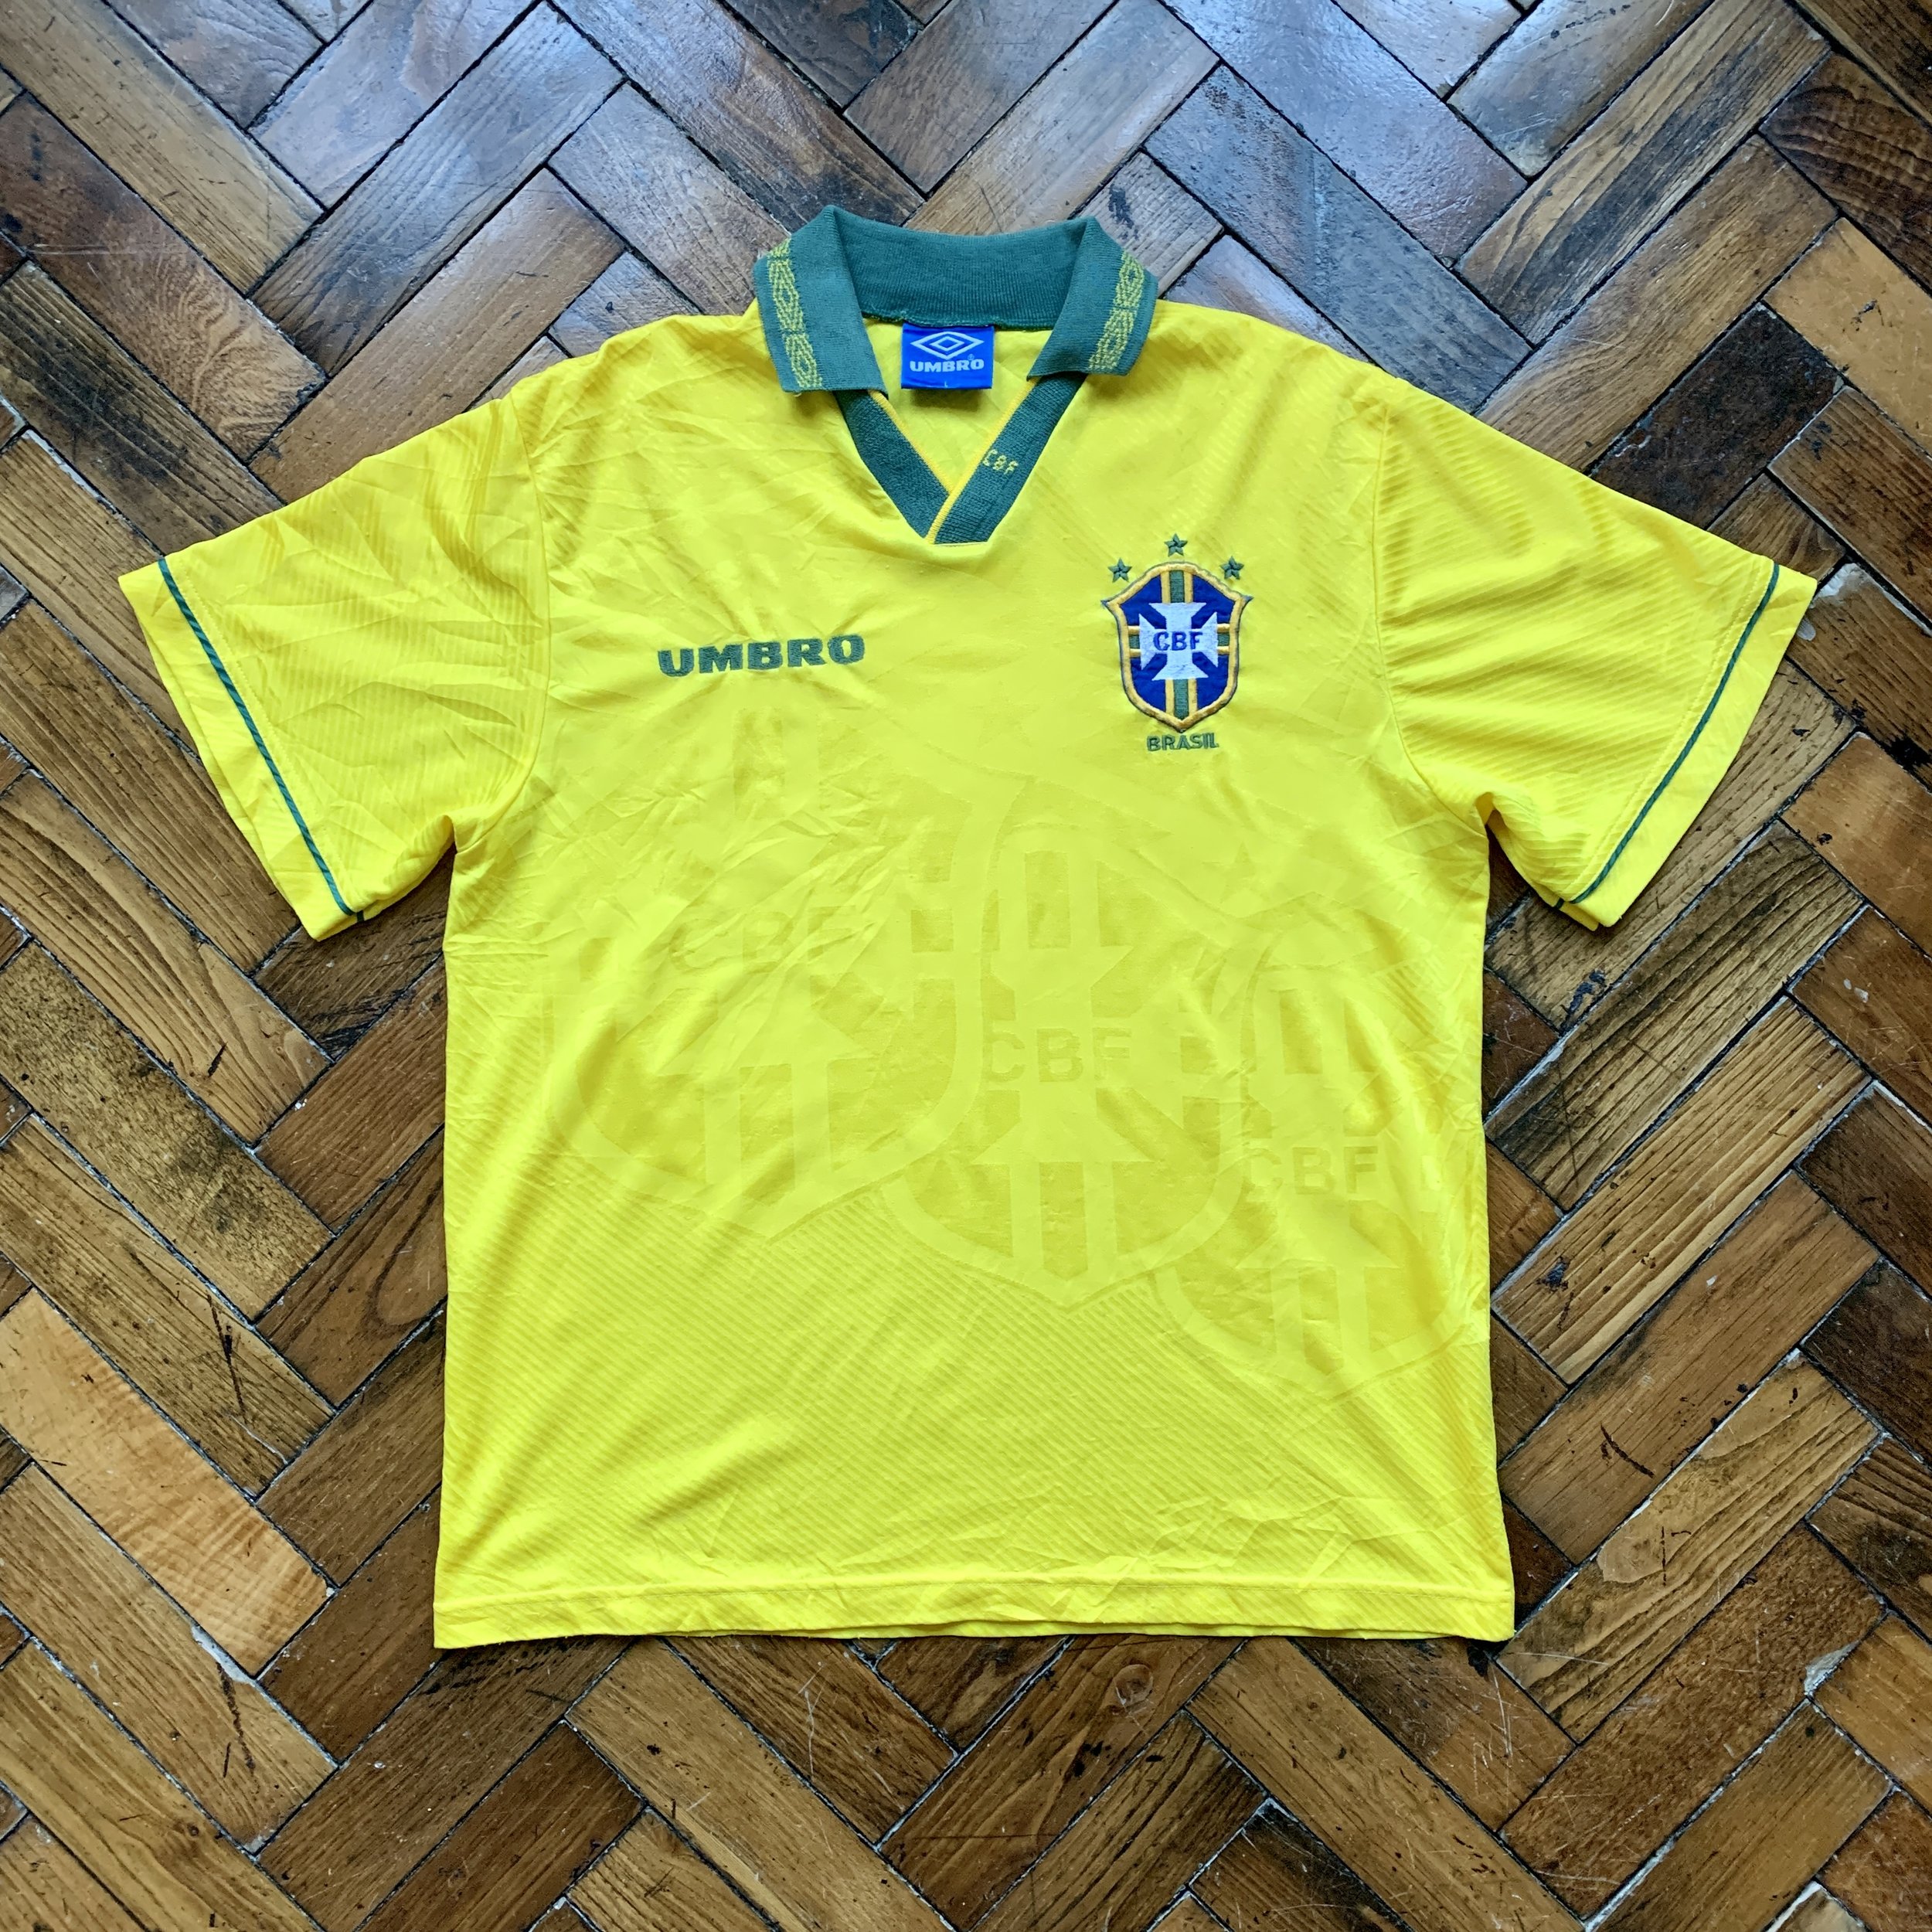 Brazilian Vintage